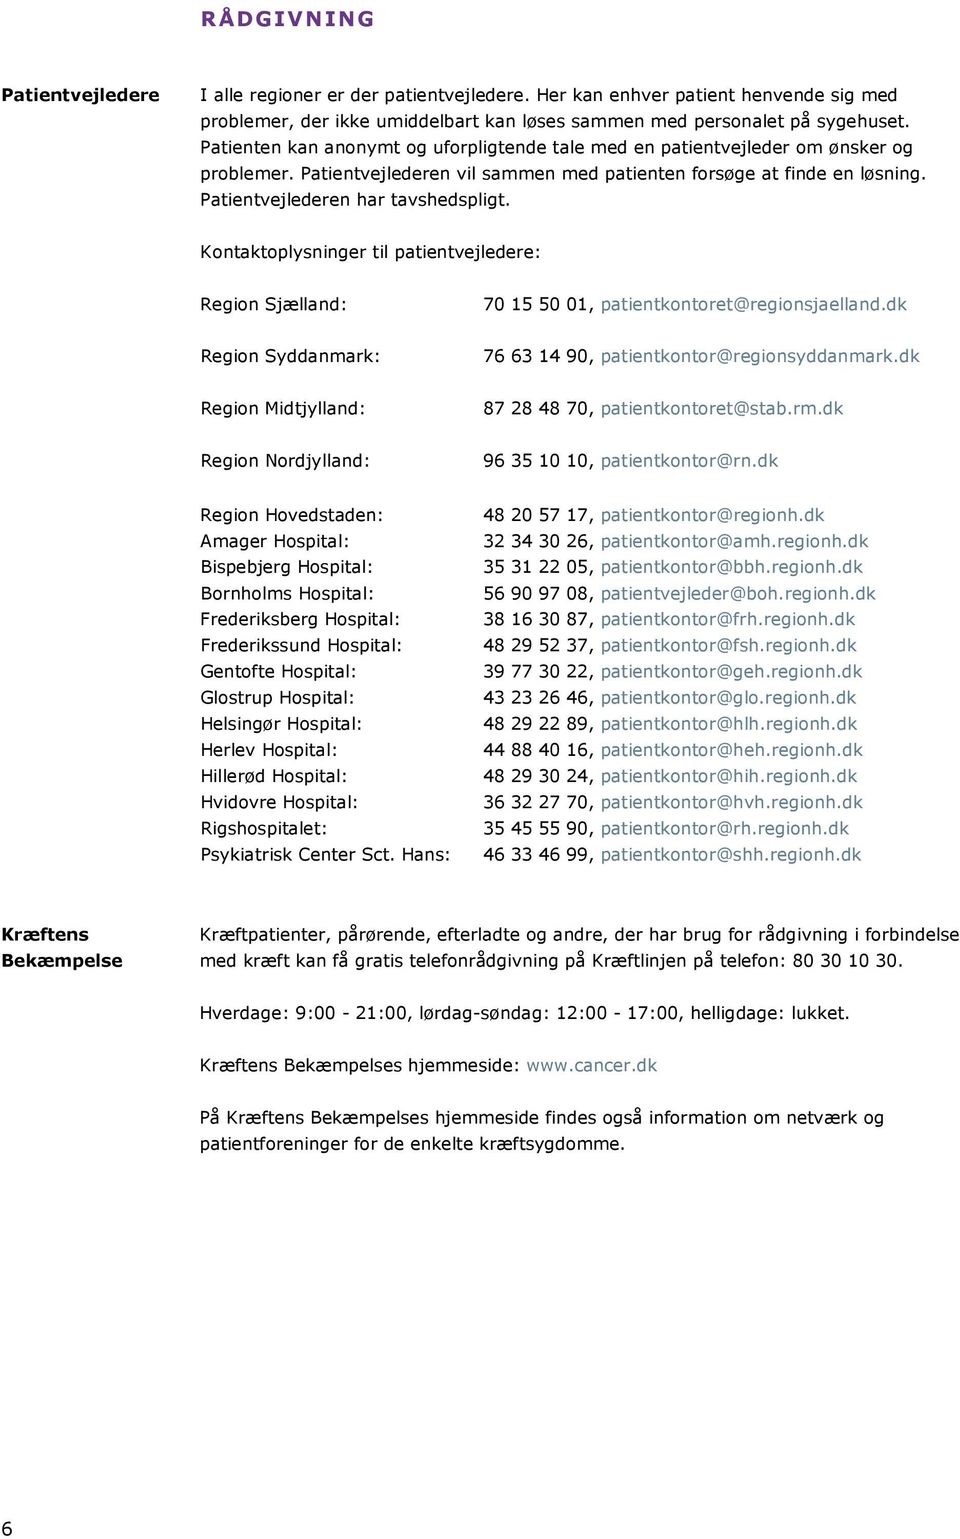 Kontaktoplysninger til patientvejledere: Region Sjælland: 70 15 50 01, patientkontoret@regionsjaelland.dk Region Syddanmark: 76 63 14 90, patientkontor@regionsyddanmark.